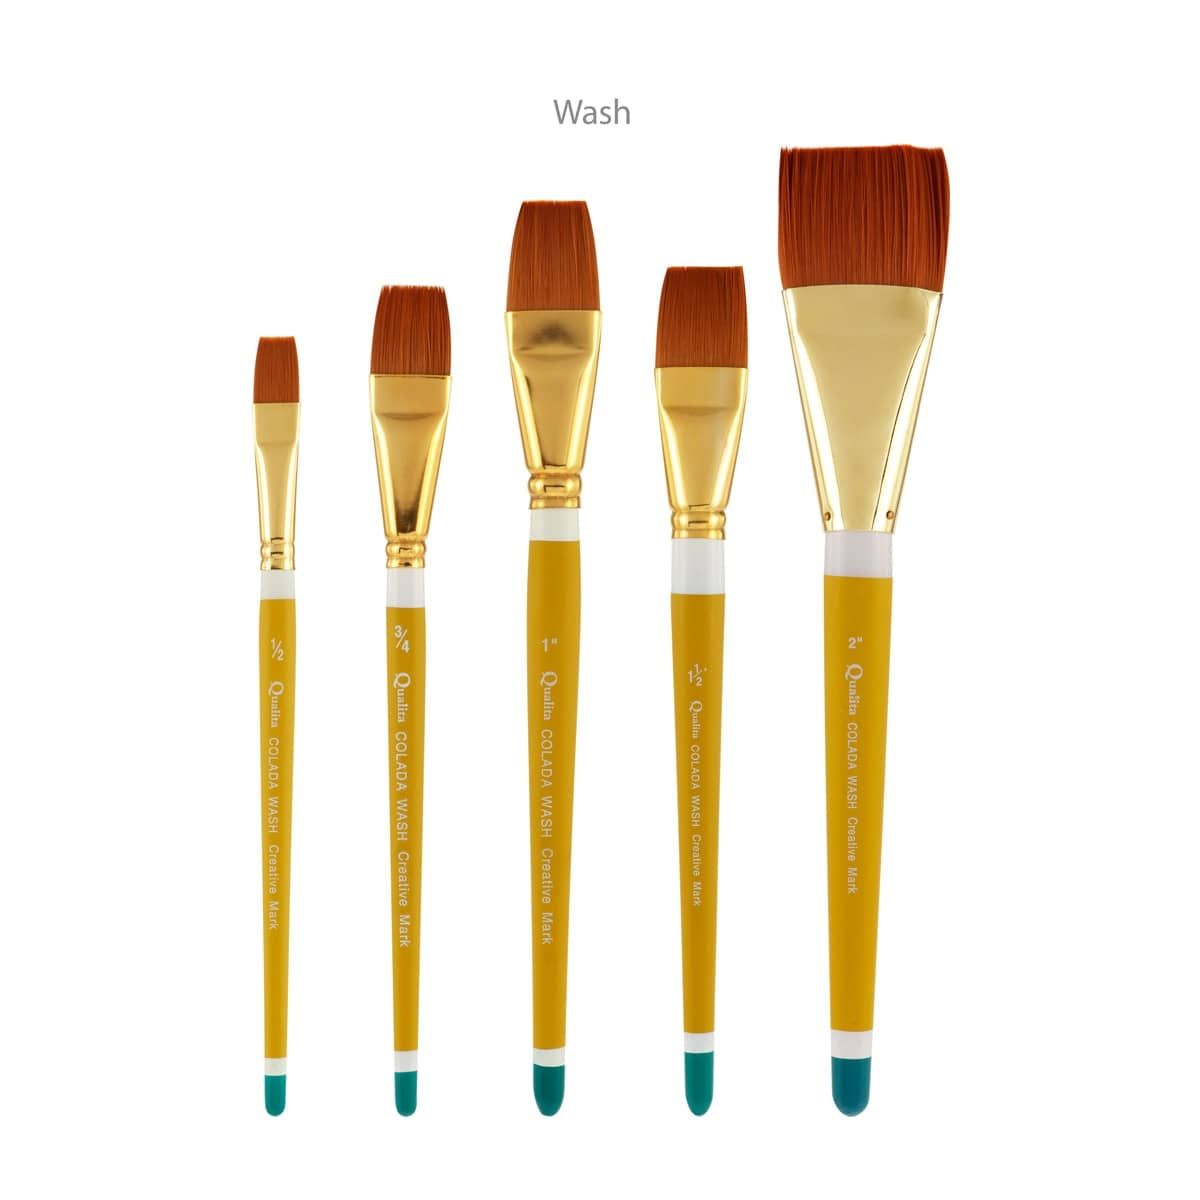 Creative Mark Qualita Golden Taklon Short Handle Brushes